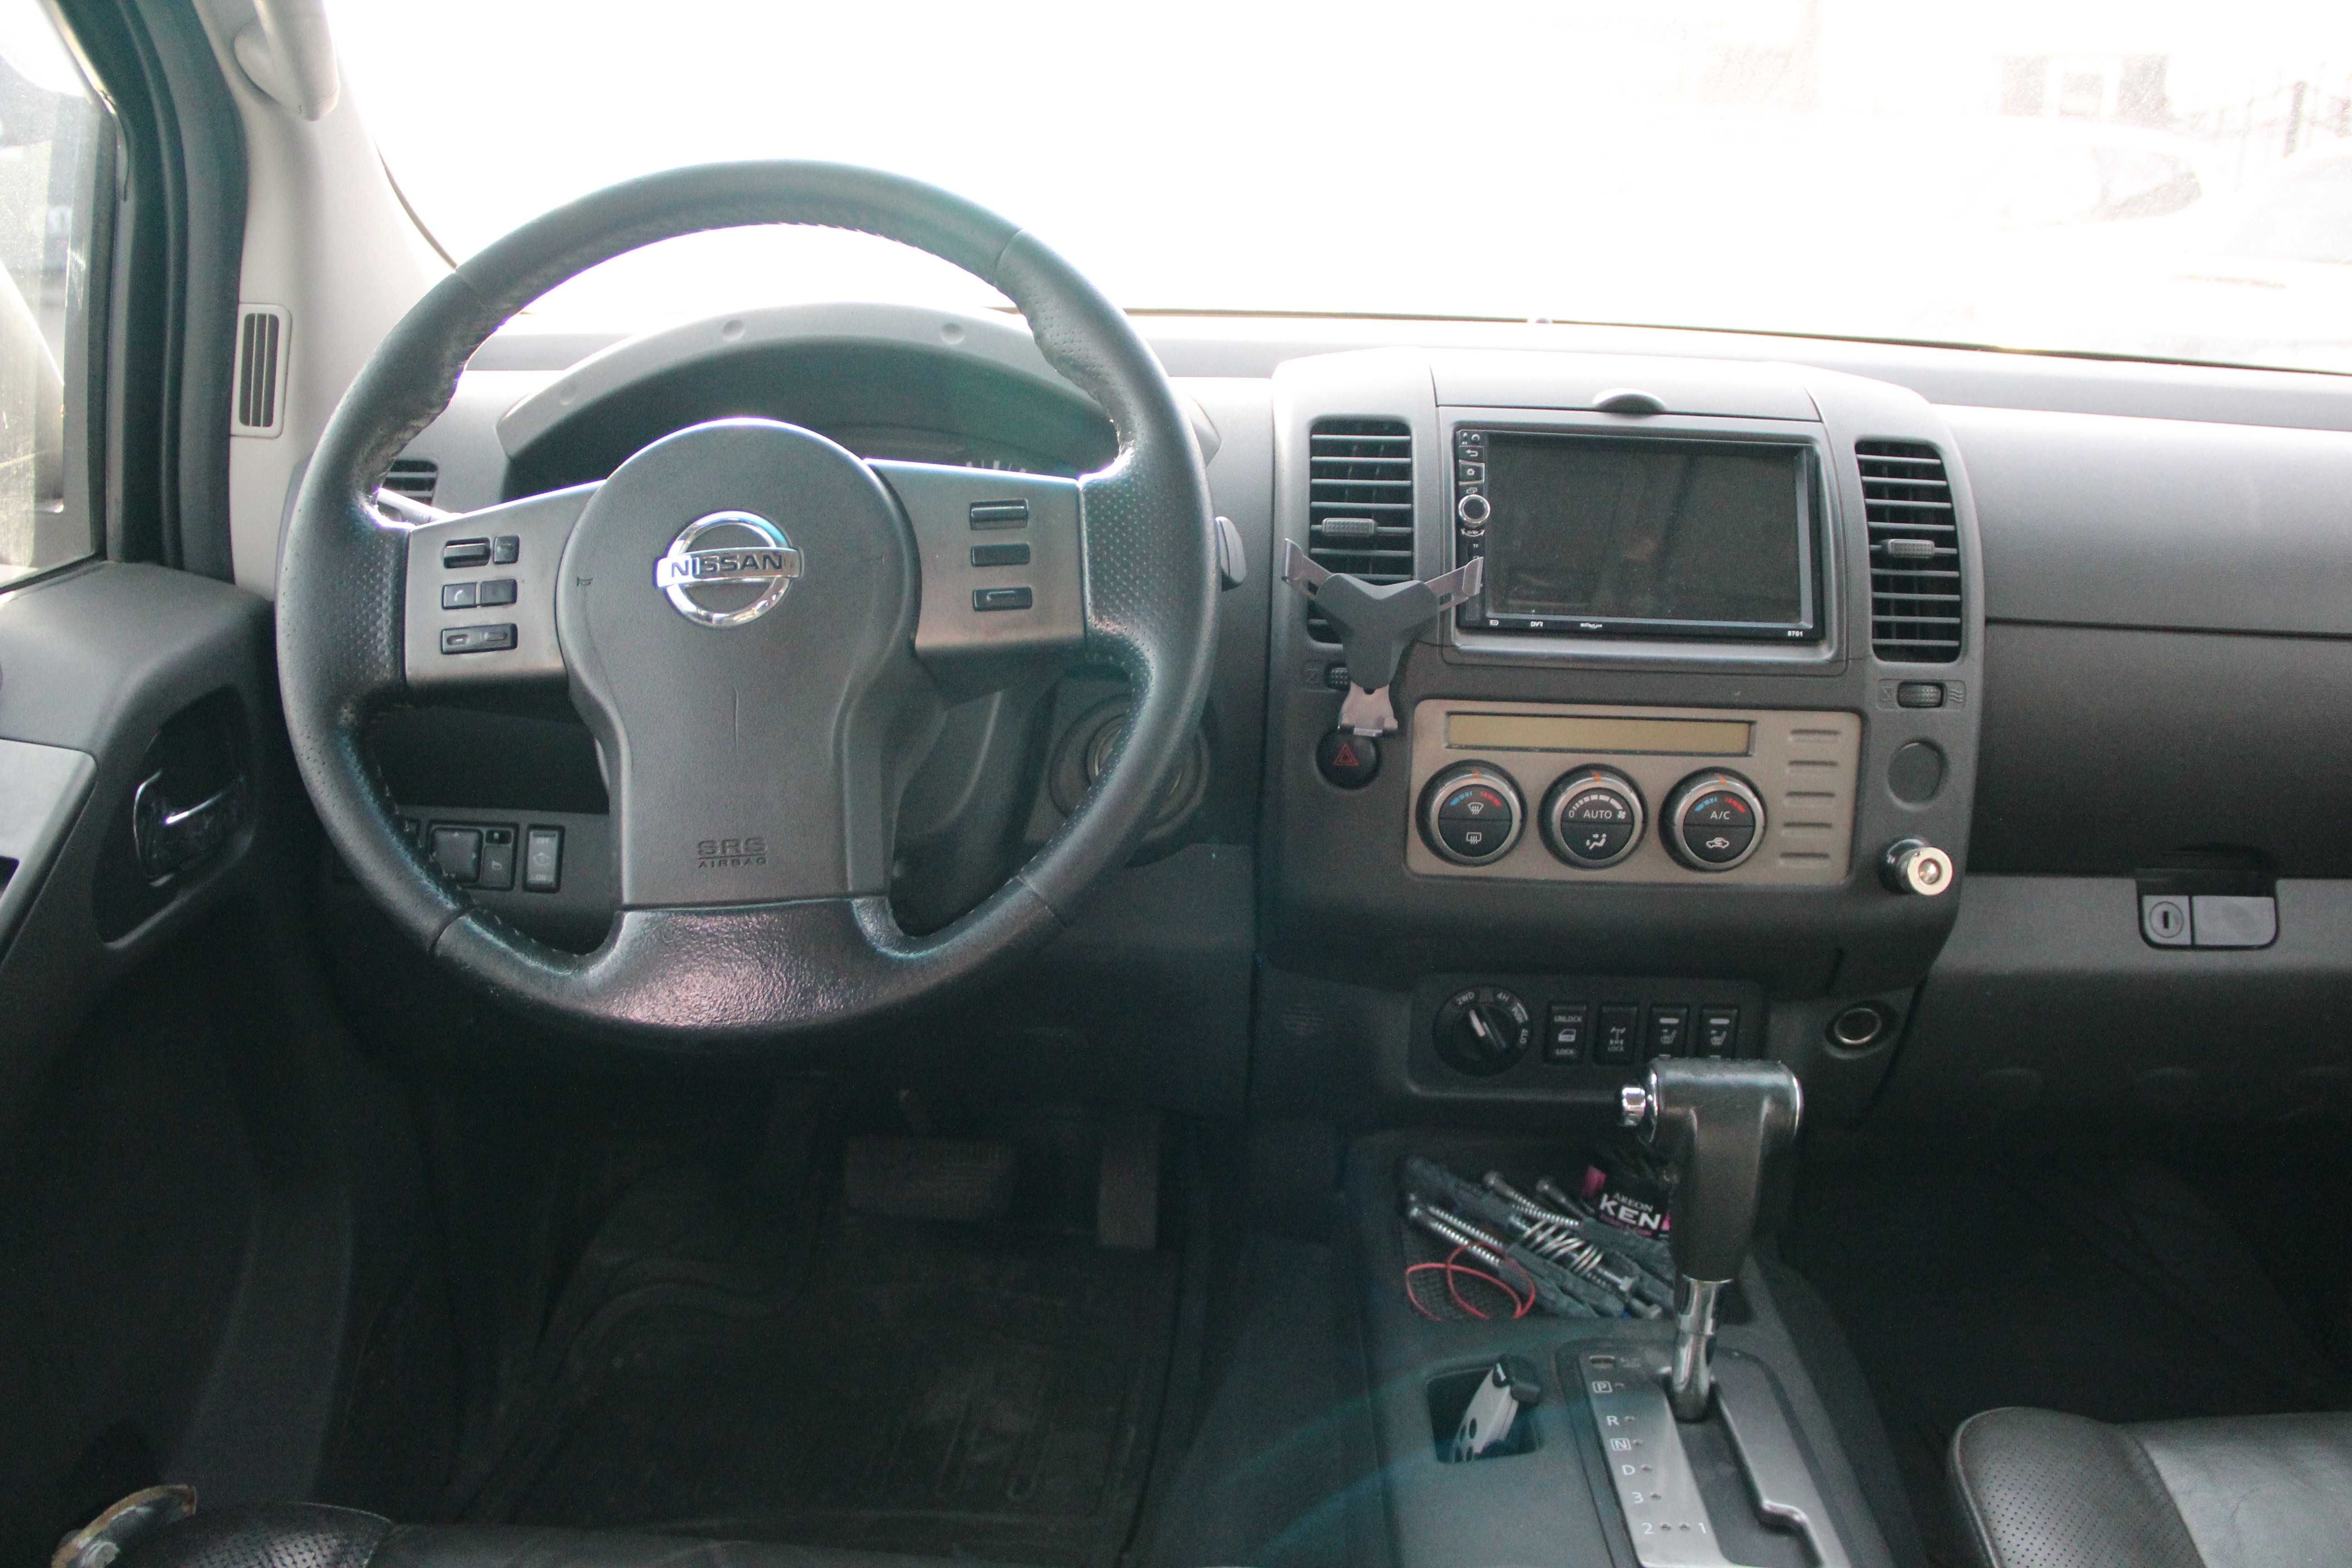 Nissan Navara , 2007 год, 2.5 турбодизель, автомат, Ниссан Наваро.